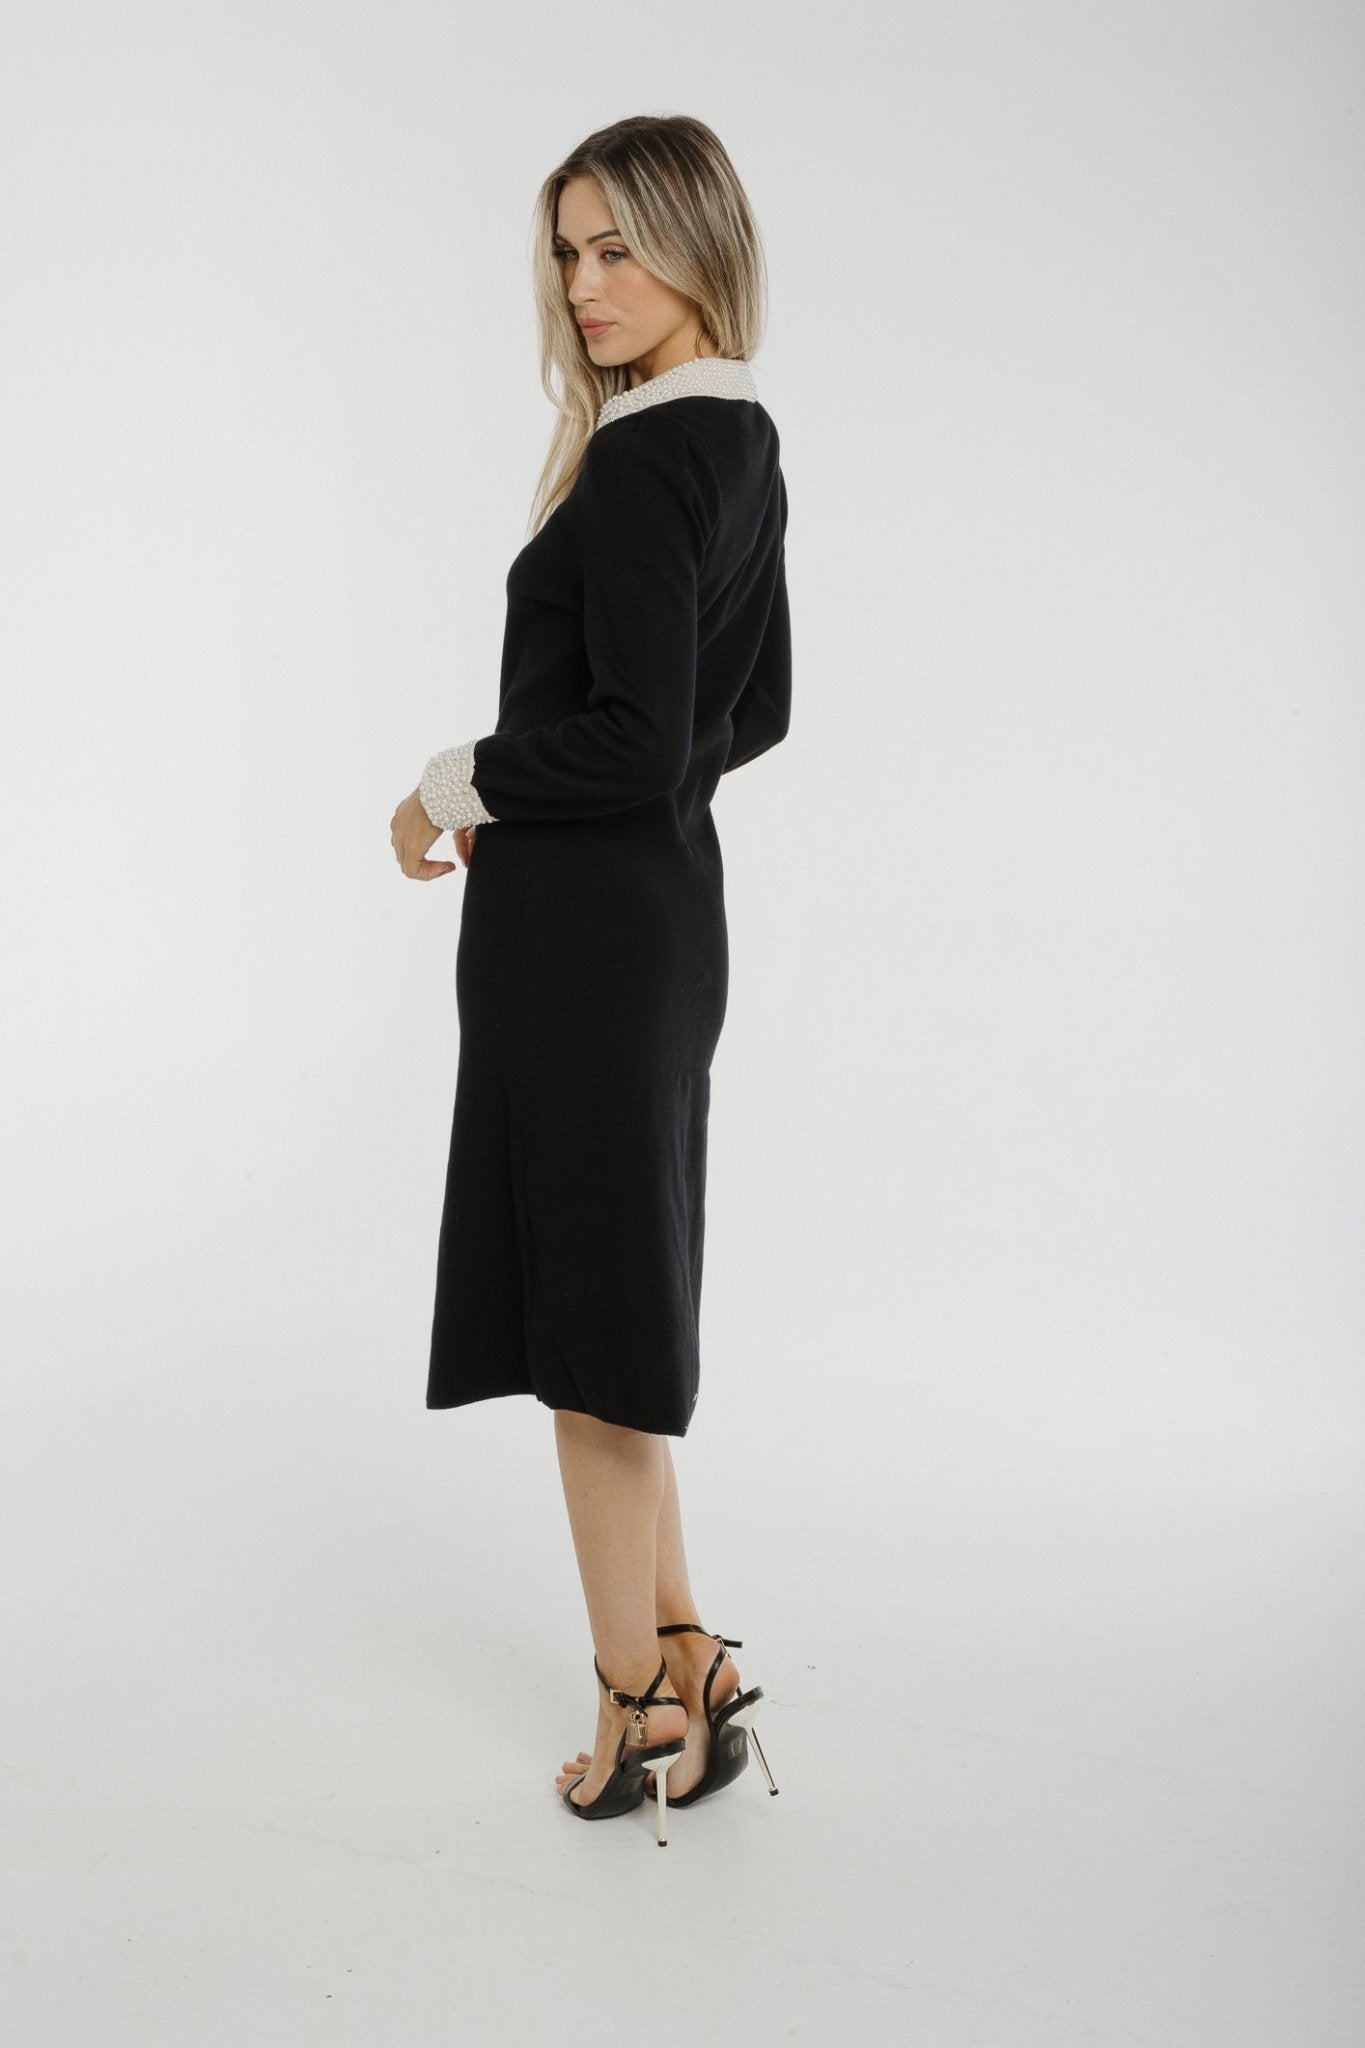 Lila Pearl Neck Knit Dress In Black - The Walk in Wardrobe